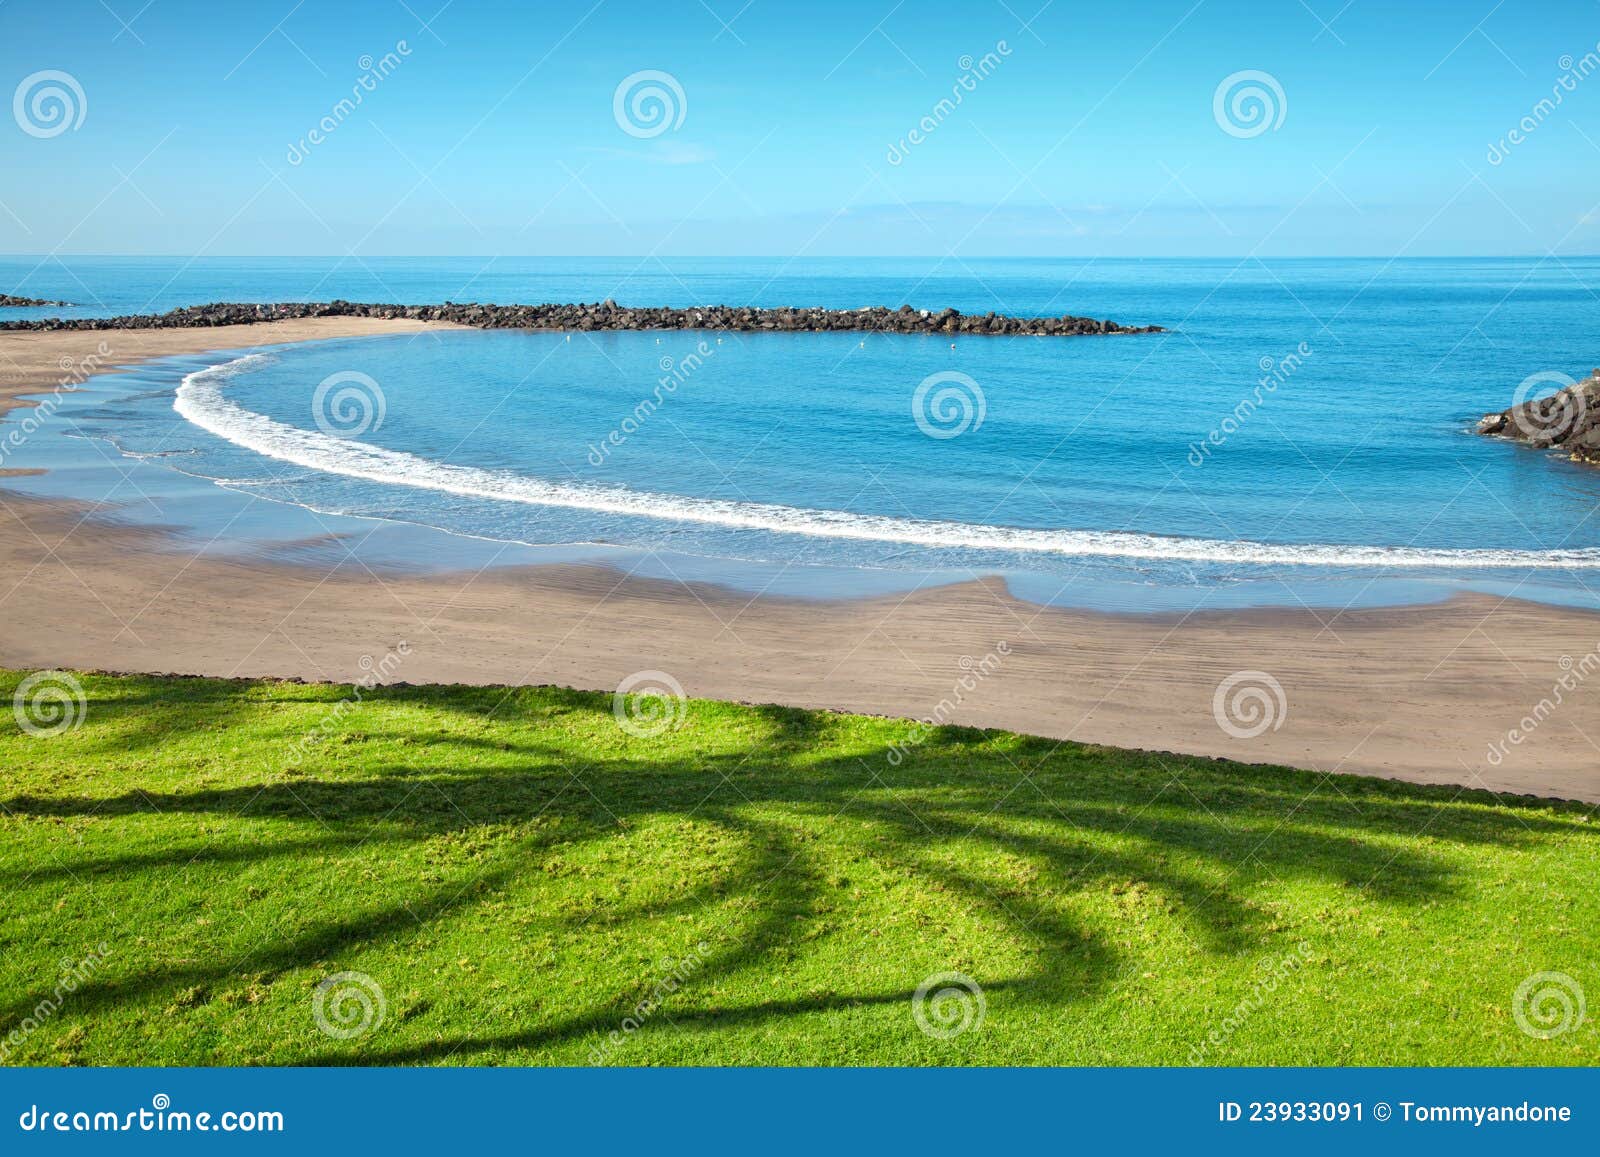 beach in playa de las americas, tenerife